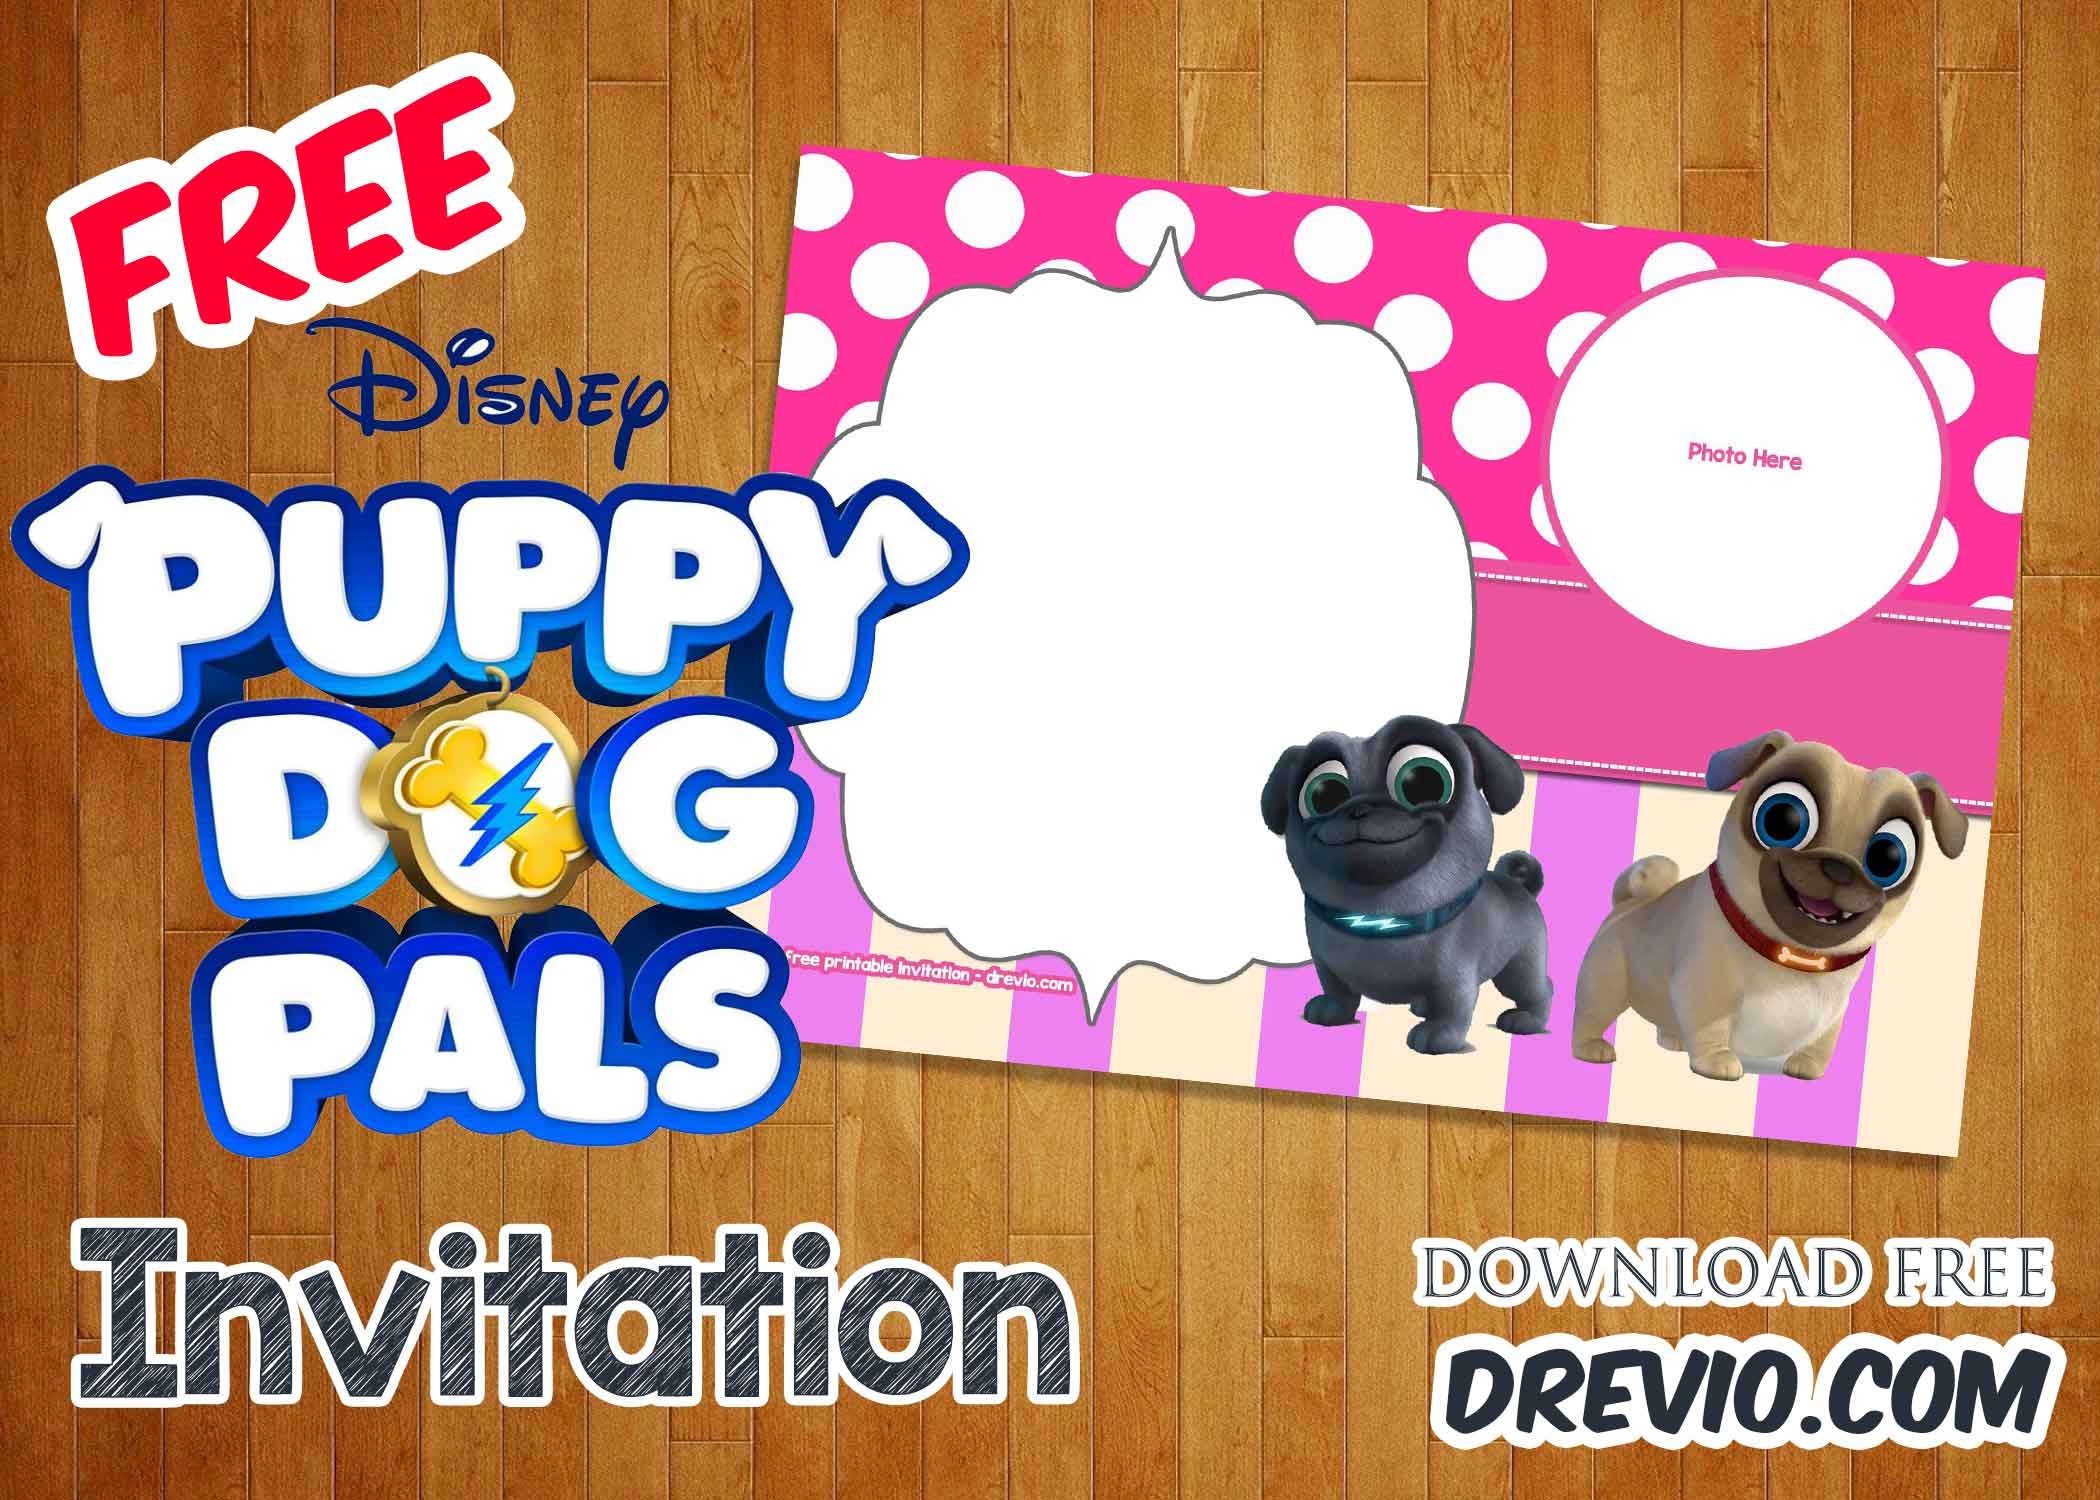 Free Disney Puppy Dog Pals Invitation Templates Download Hundreds Free Printable Birthday Invitation Templates